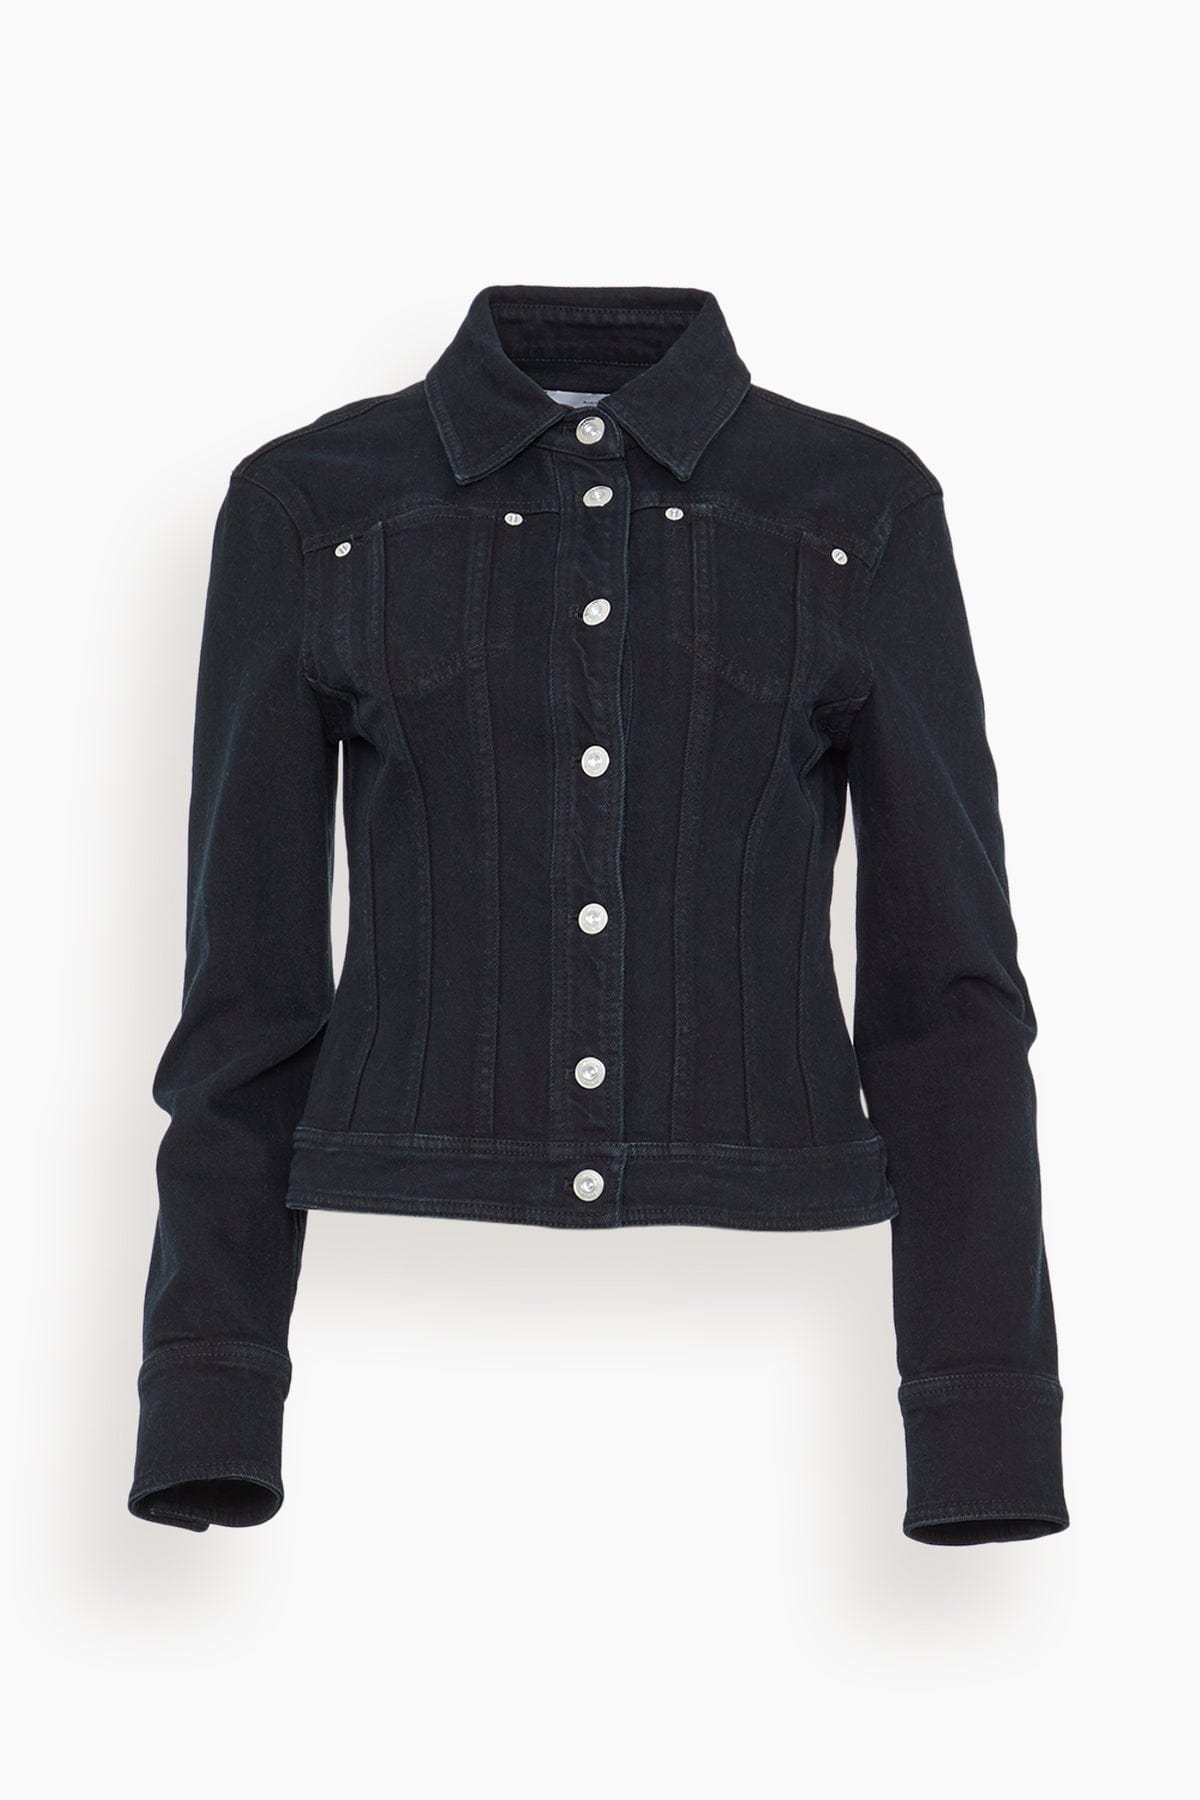 Proenza Schouler White Label Denim Jacket in Black - Black - Size: 2